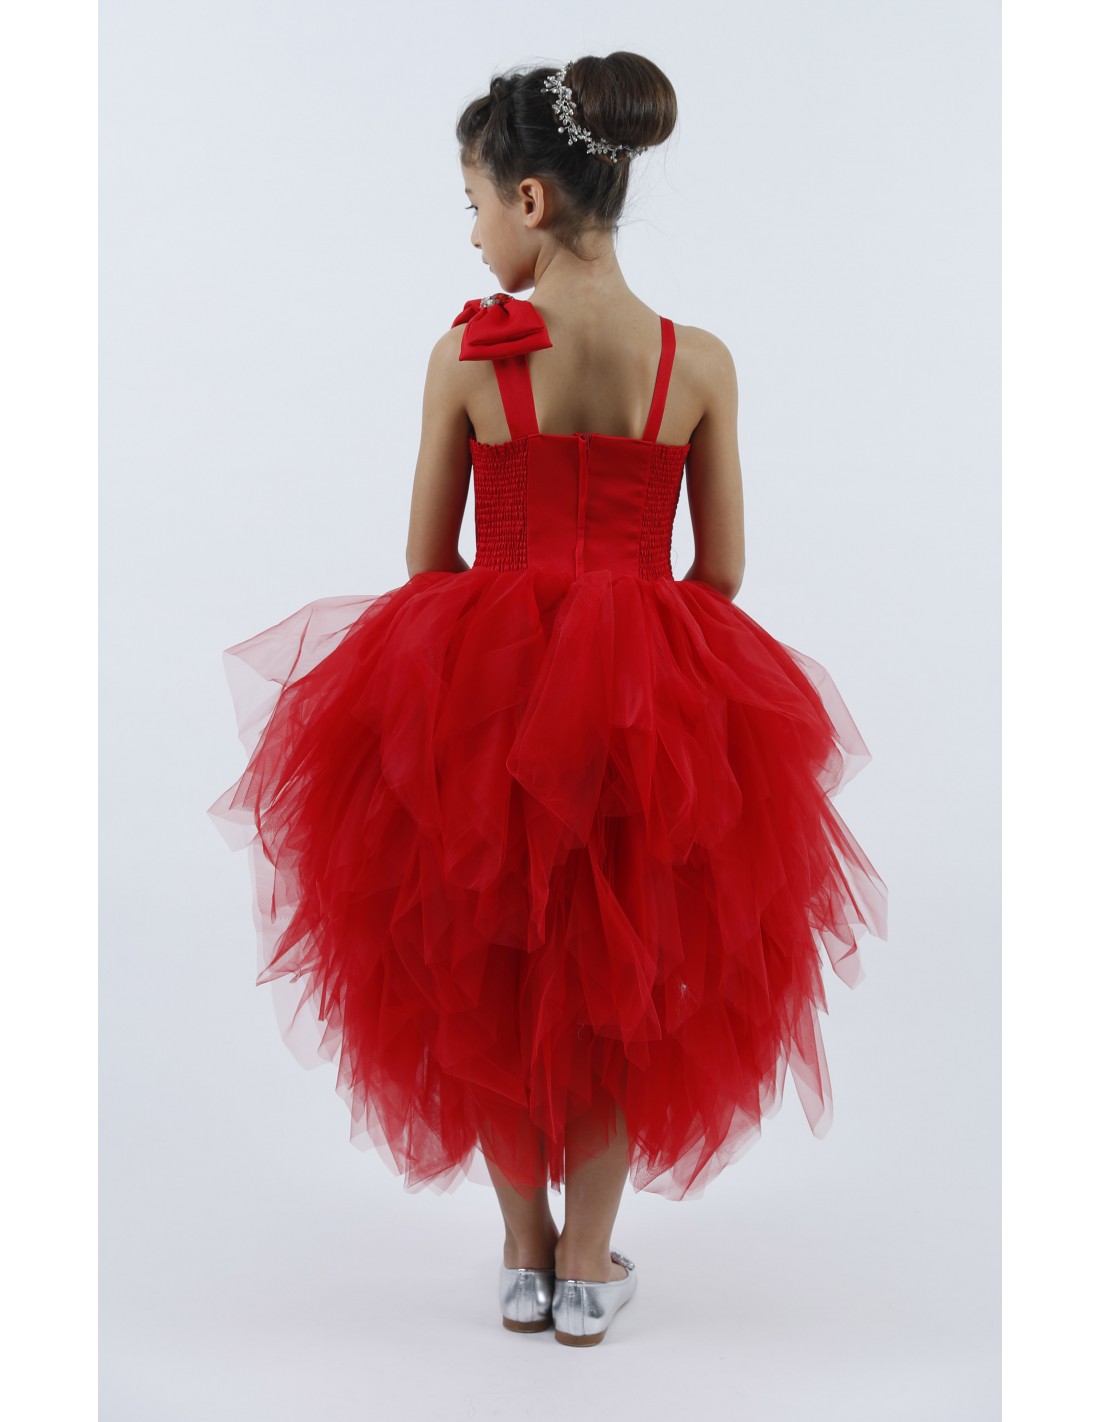 Robe de princesse rouge pour fille Tiffany  Collection Ezda TAILLE 16 ans  ( En magasin )